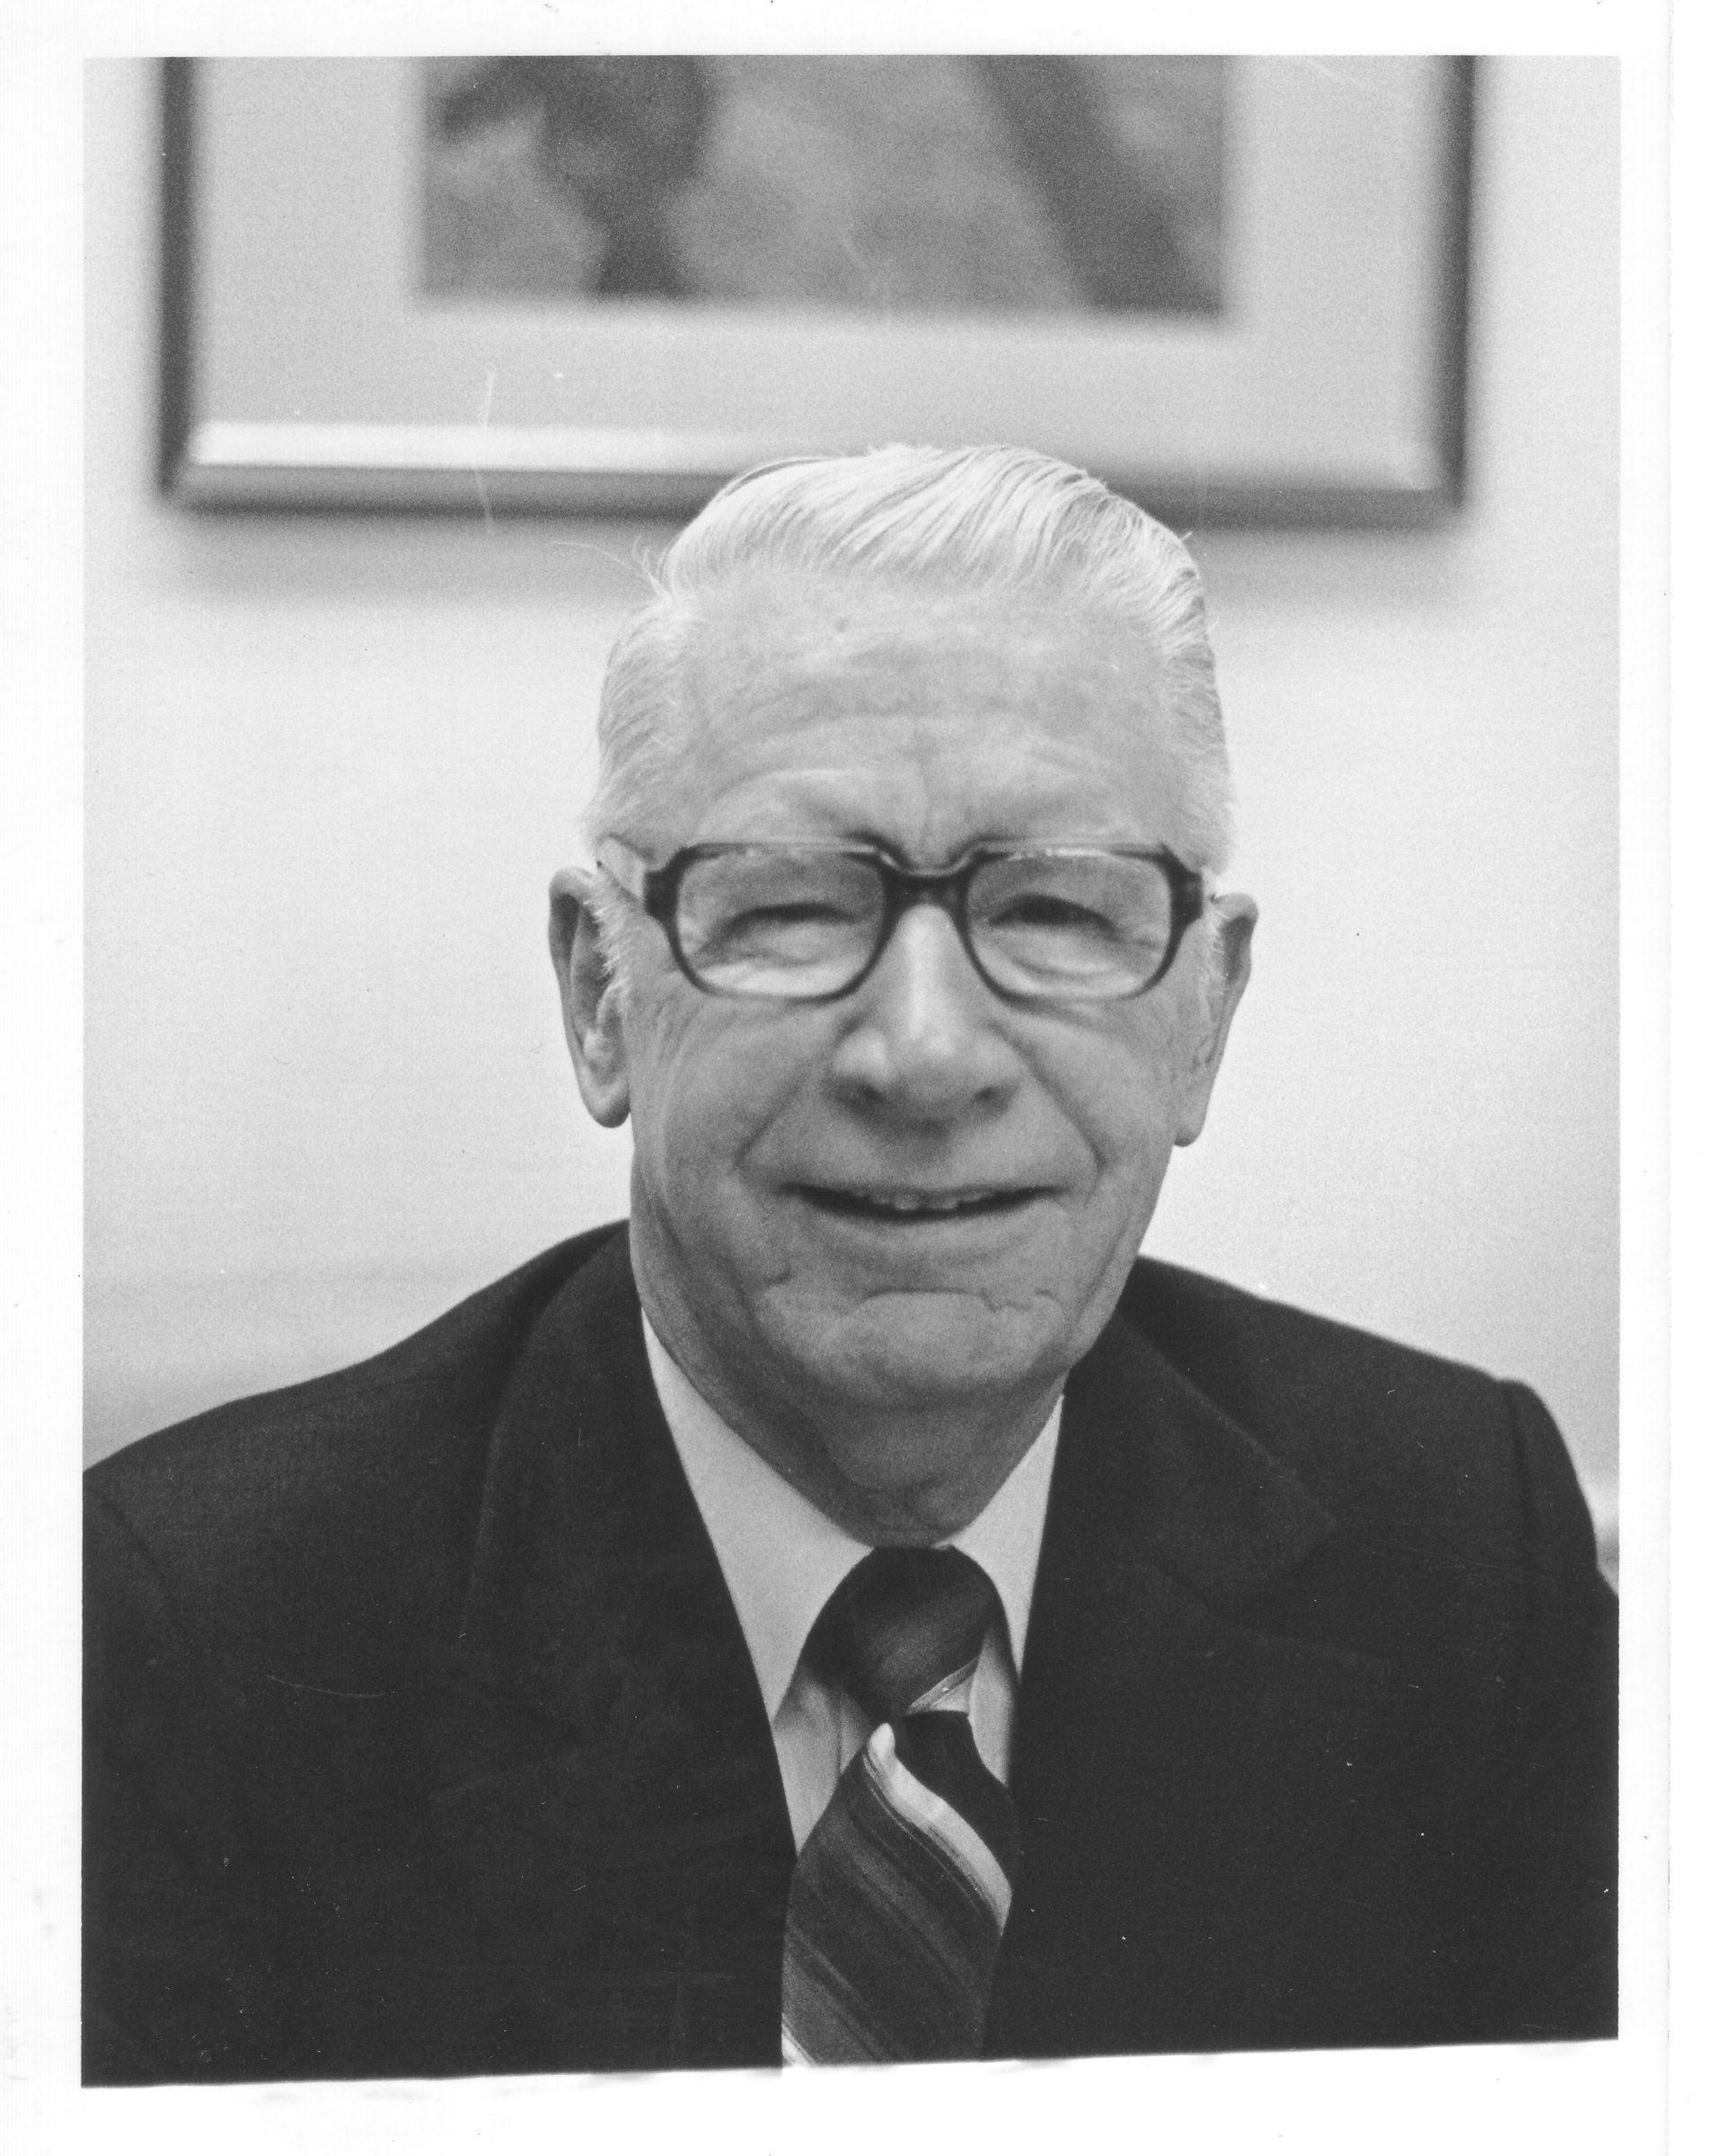 Dr. Robert C. Krug in his office